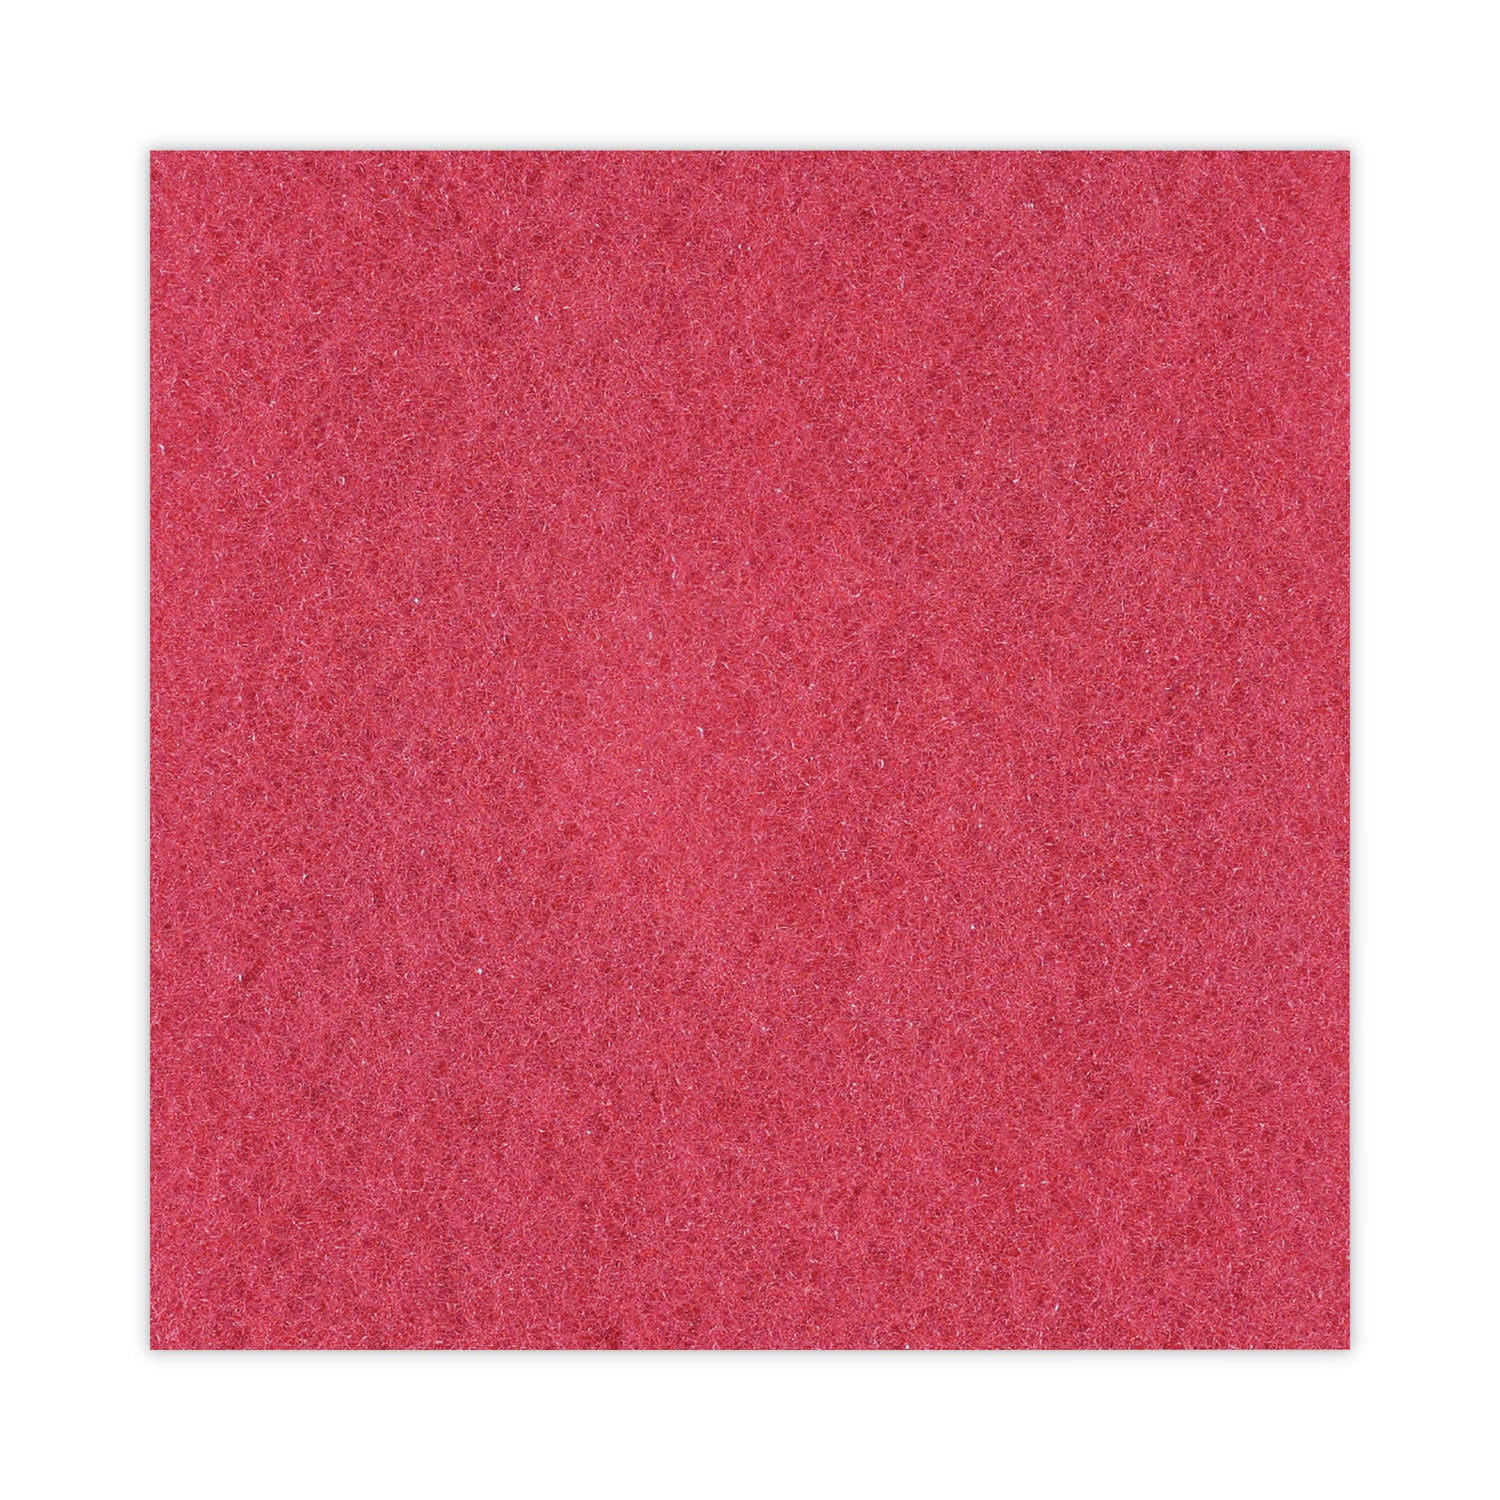 buffing-floor-pads-19-diameter-red-5-carton_bwk4019red - 6